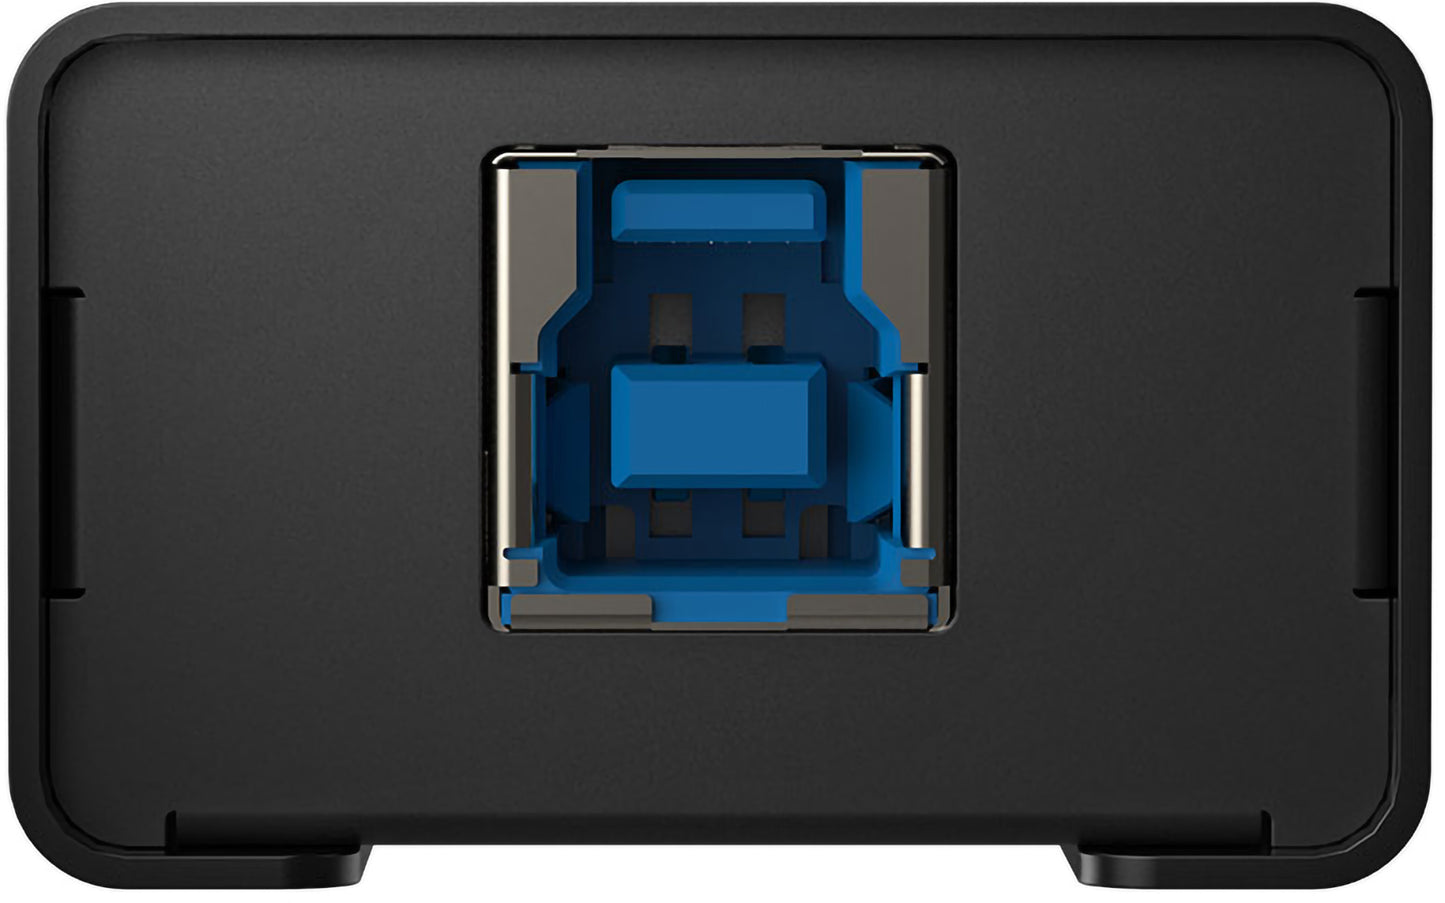 Roland UVC-01 USB Capture HDMI